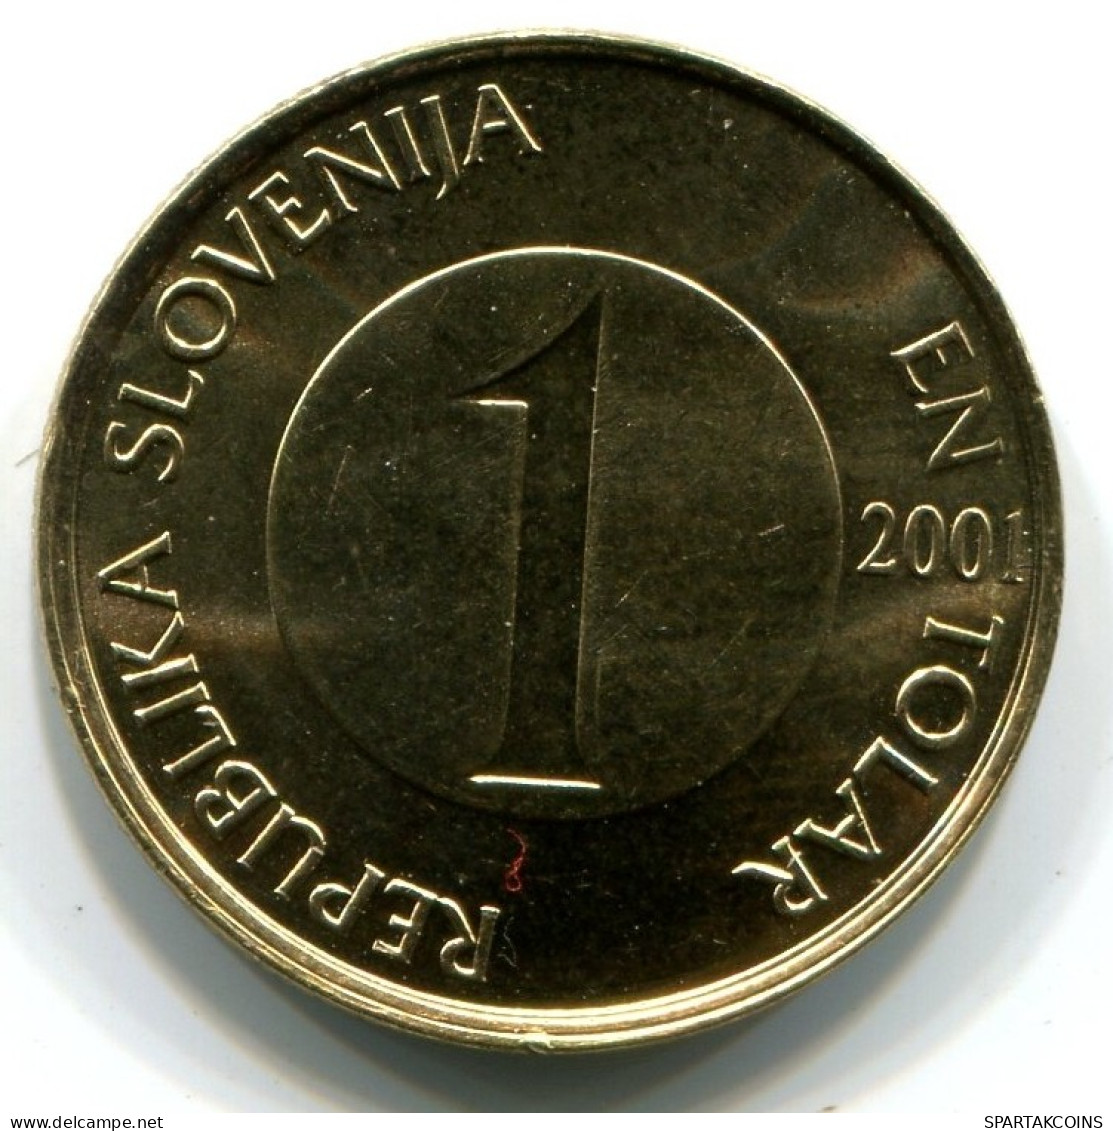 1 TOLAR 2001 SLOVENIA UNC Fish Coin #W11370.U.A - Slowenien